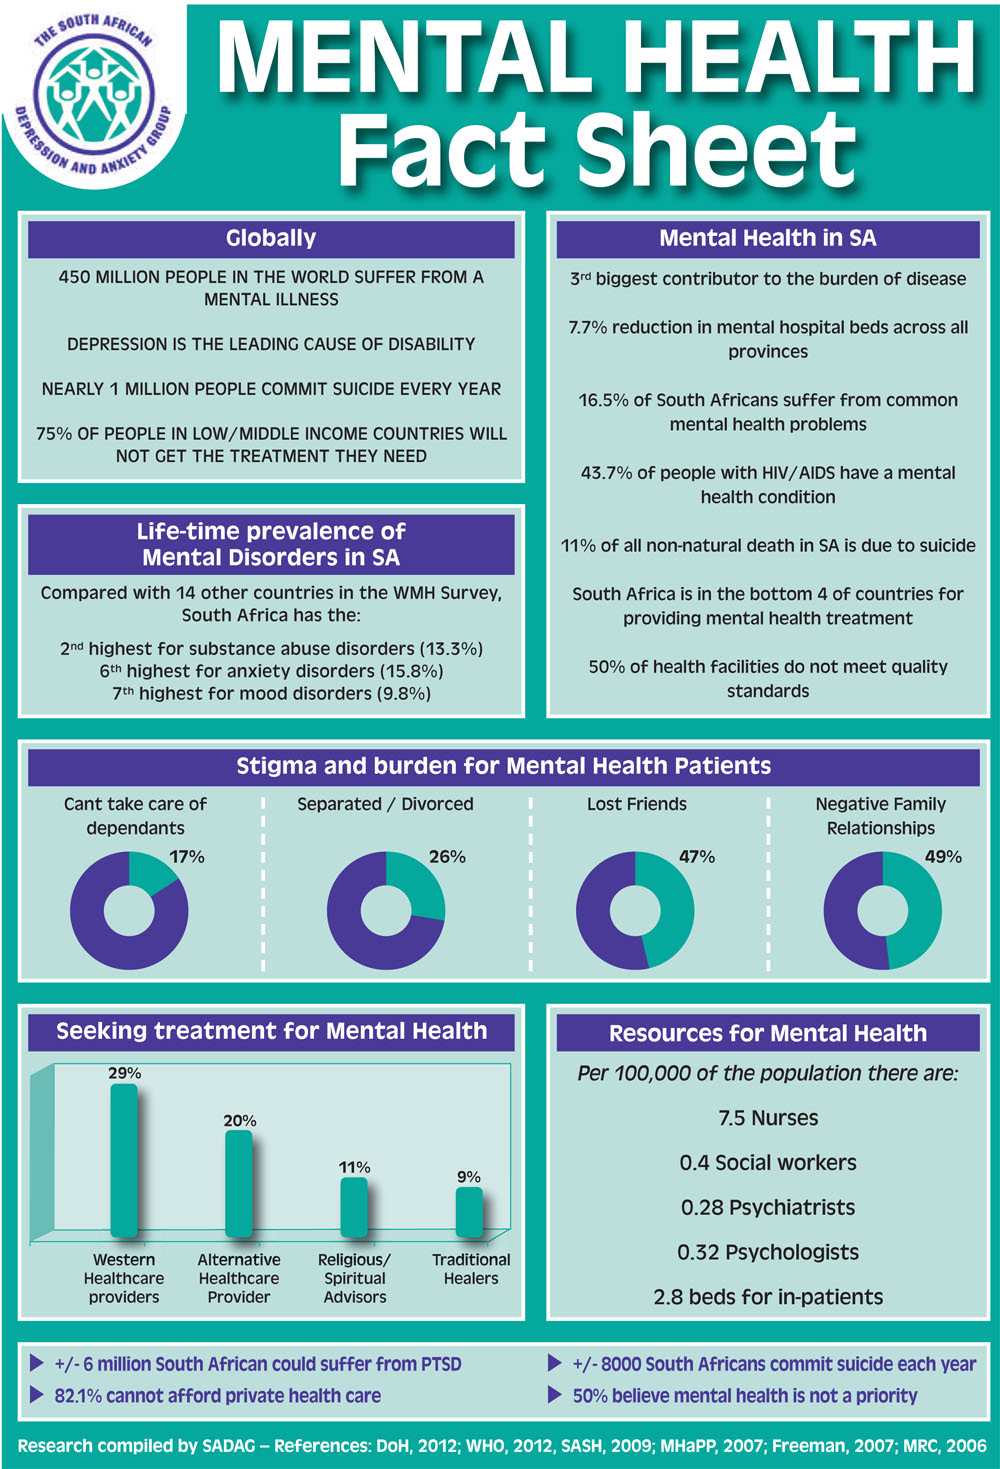 Mental Health Fact Sheet 2014